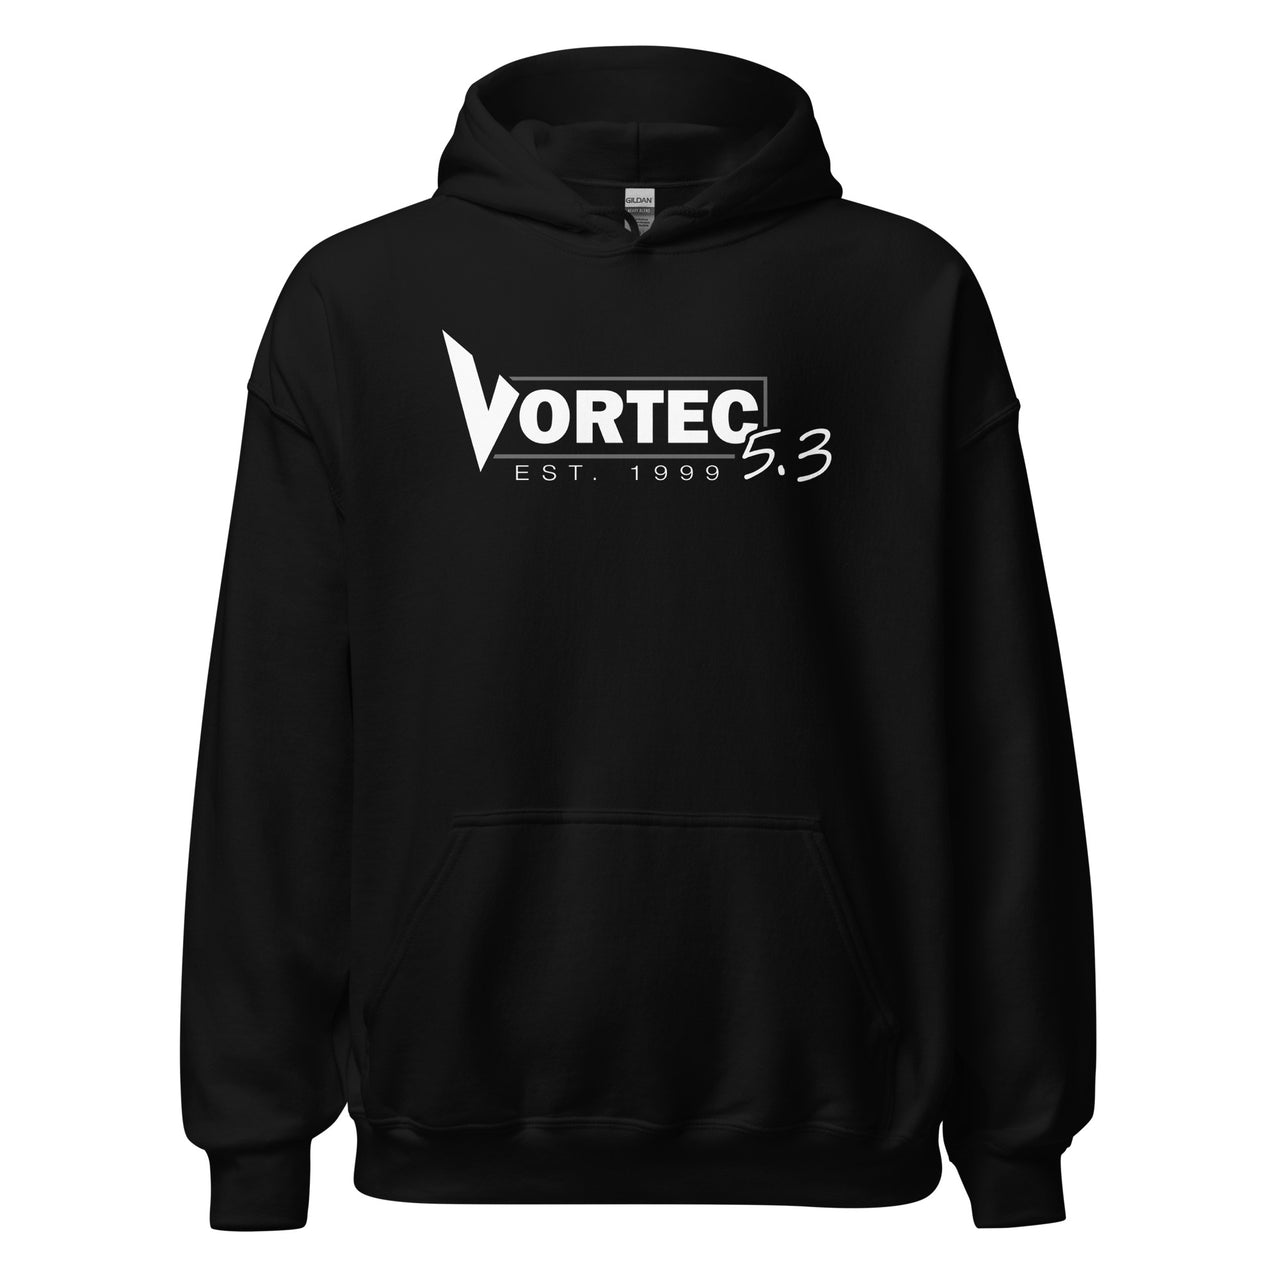 Vortec 5.3 LS V8 Hoodie in black